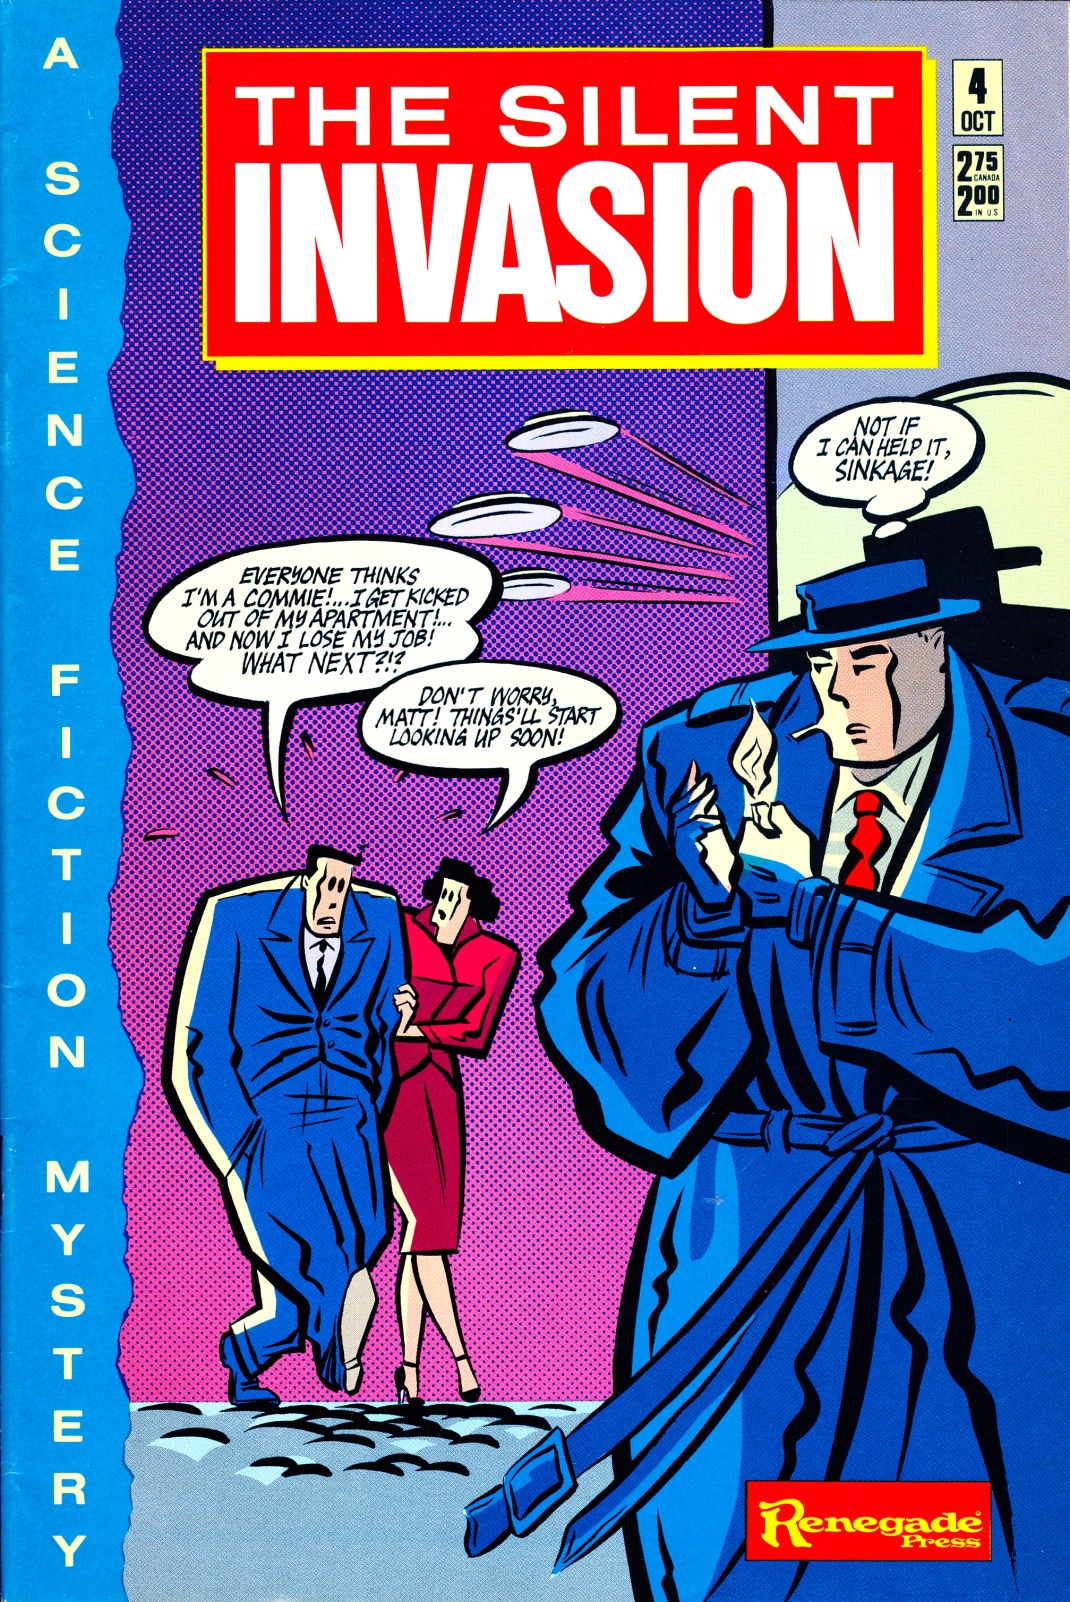 C:\Users\Robert\Documents\CARTOONING ILLUSTRATION ANIMATION\IMAGE BY CARTOONIST\C\CHERKAS Michael, The Silent Invasion, 4, Oct. 1986.jpg